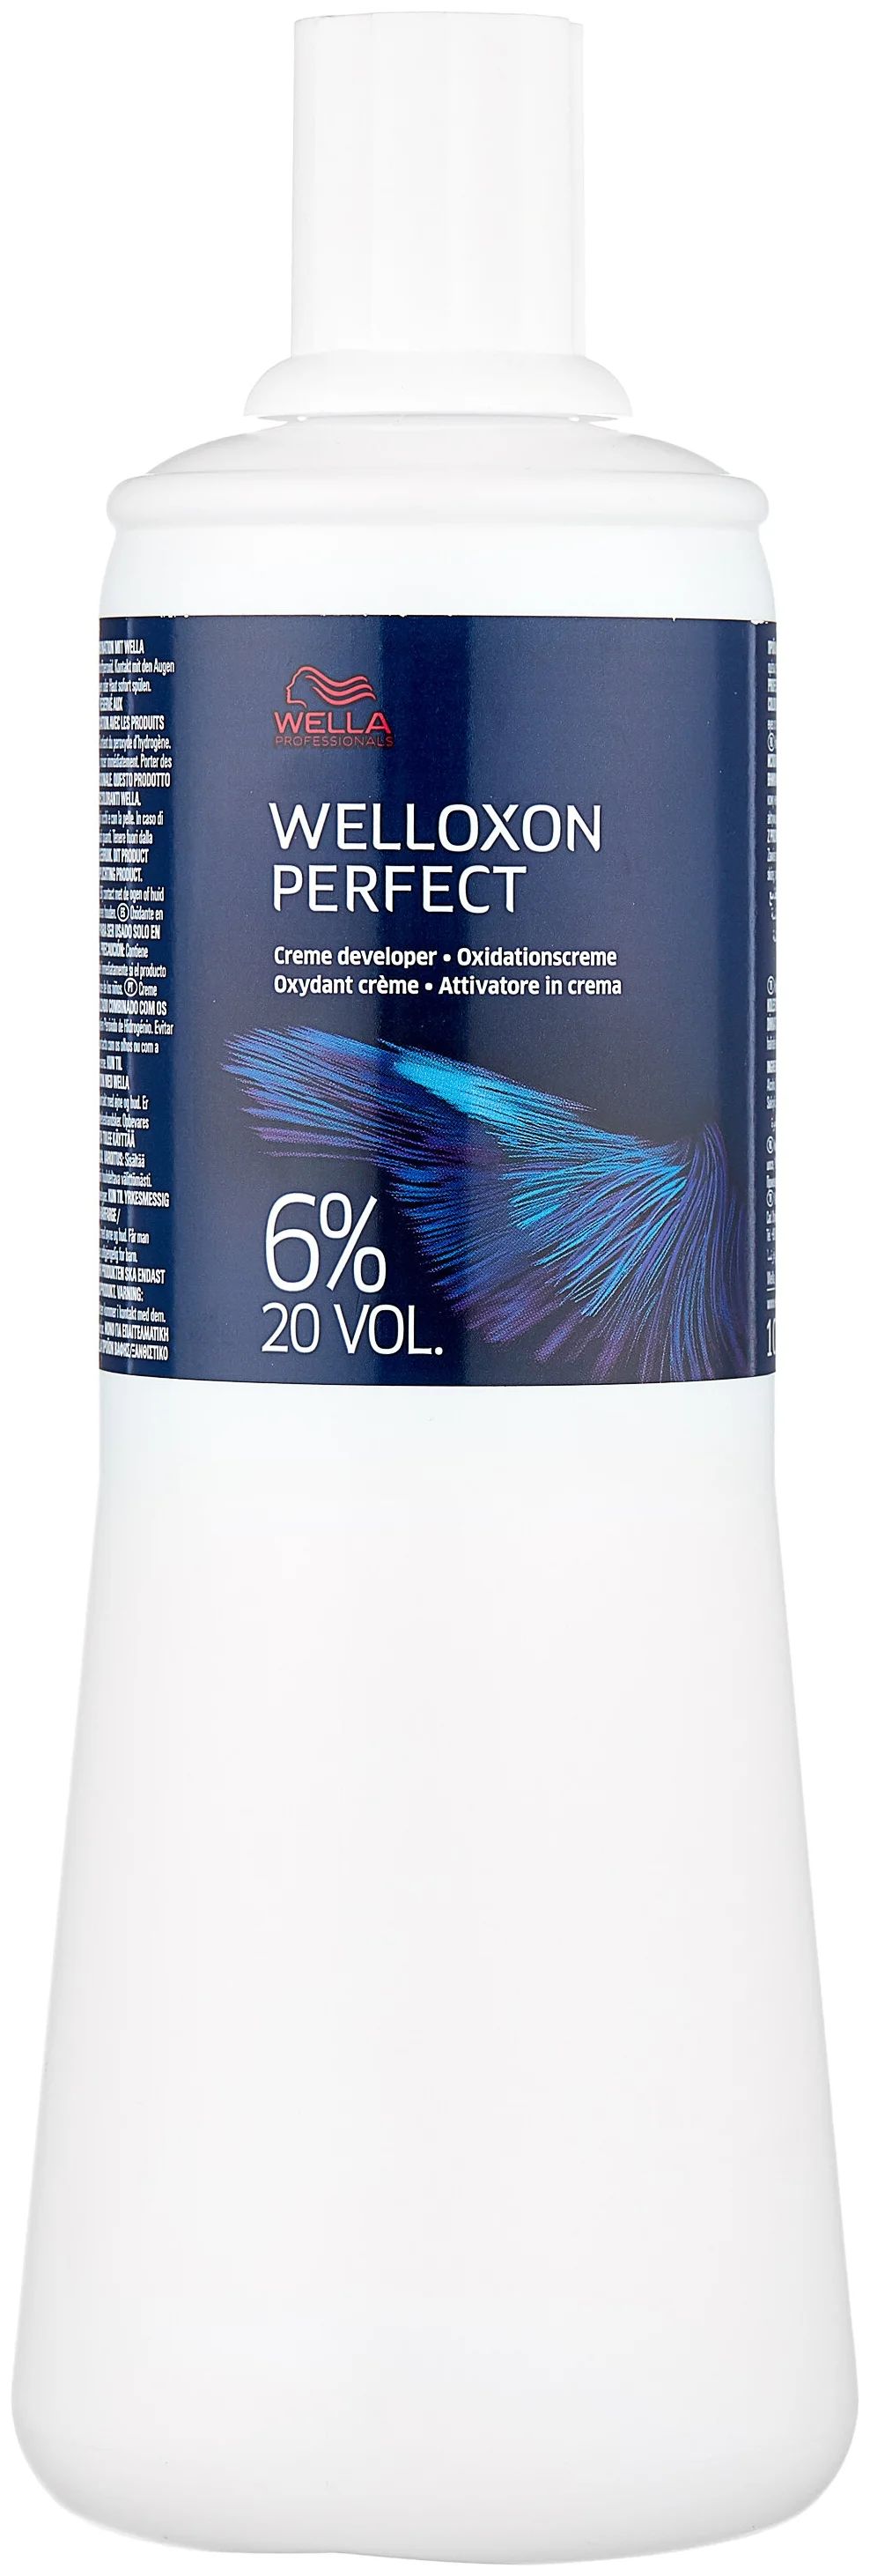 Краска для волос Wella Welloxon Koleston Perfect 6% крем-проявитель, 1 л проявитель wella professionals welloxon 12% 1000 мл